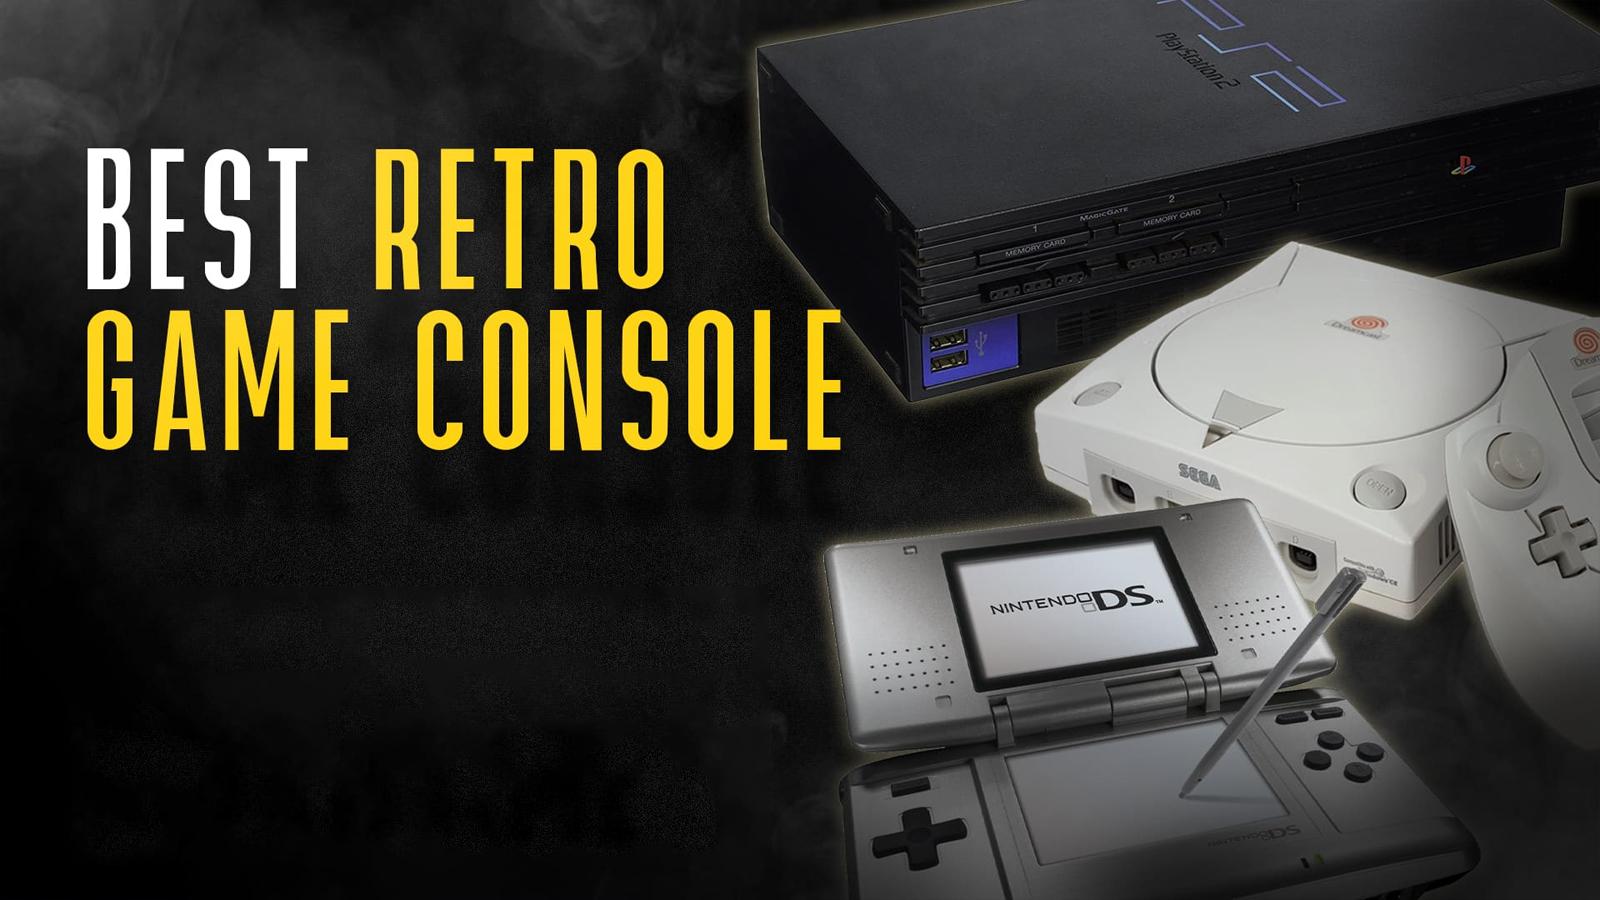 The Best Retro Gaming Consoles